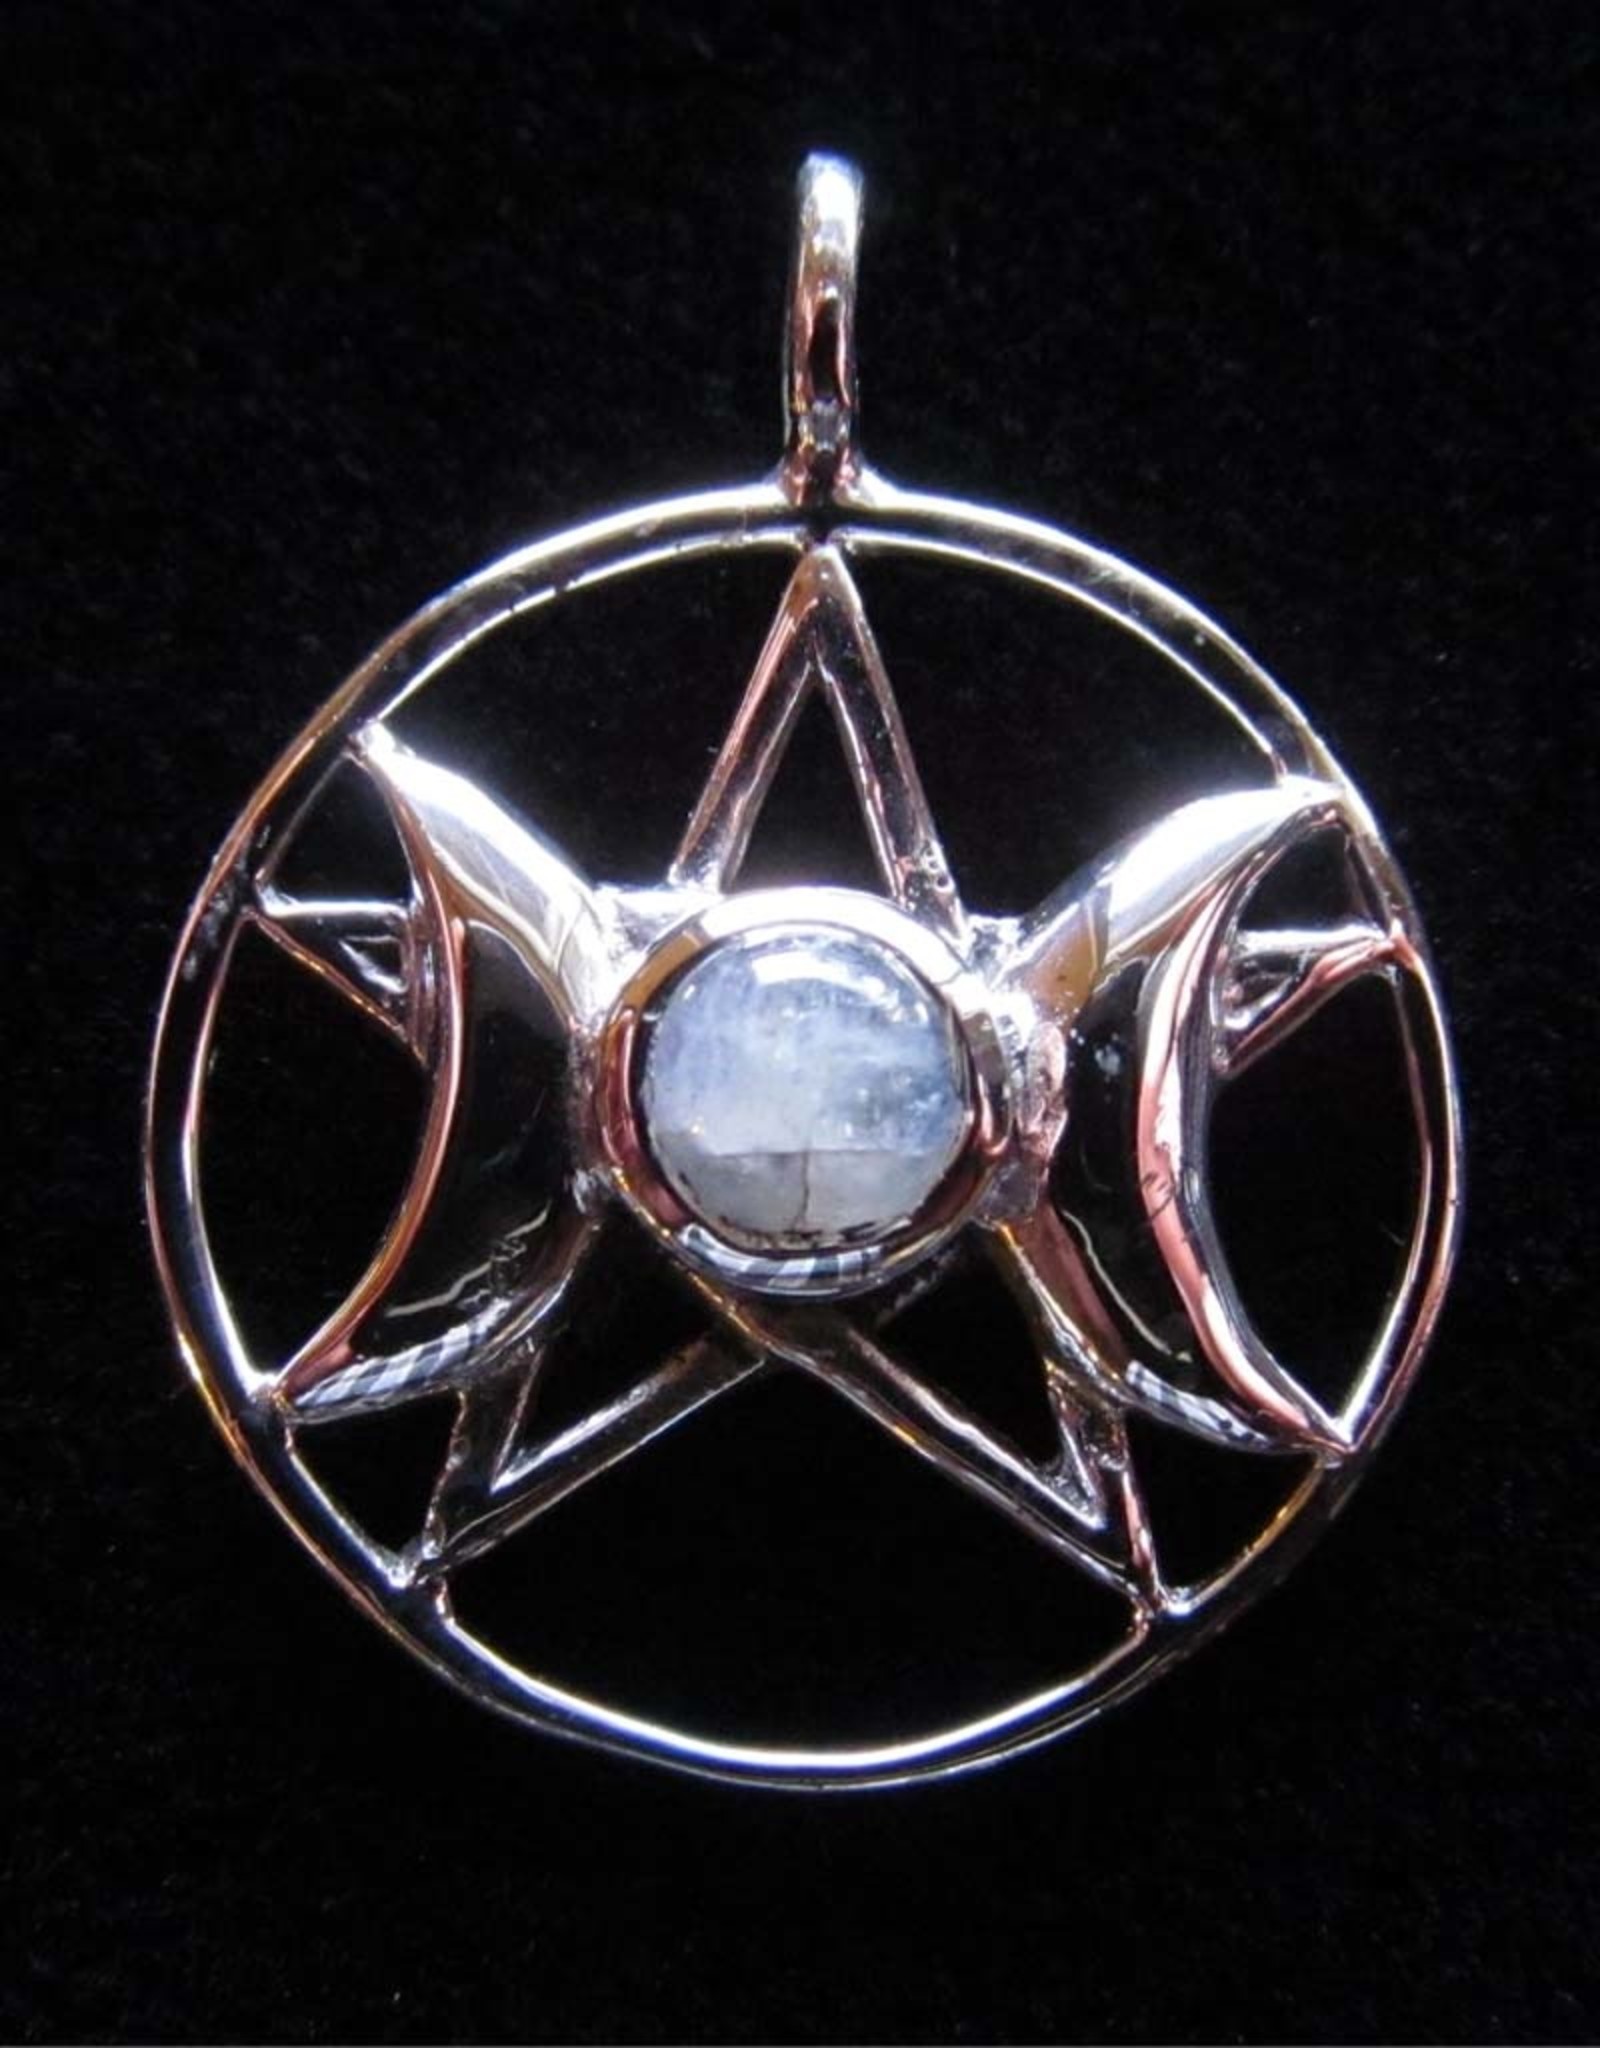 Triple Goddess w/ Moonstone Pendant - Sterling Silver